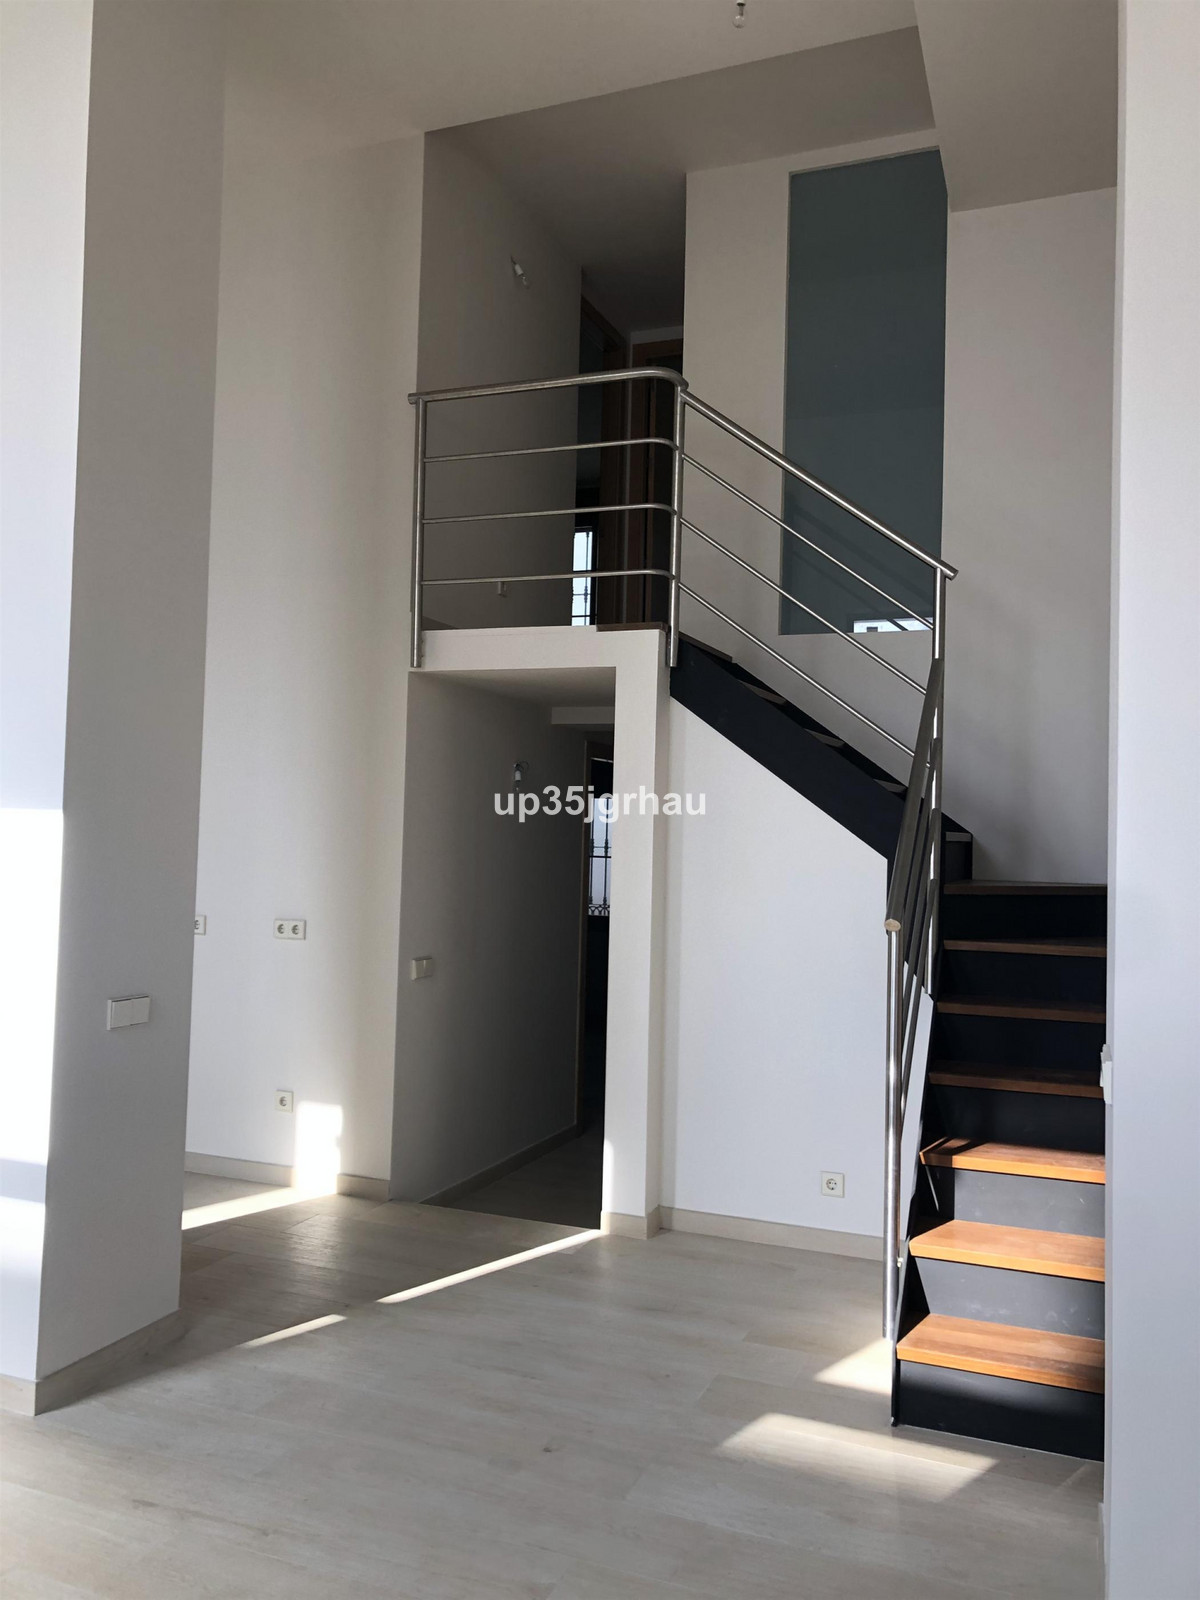 						Apartment  Ground Floor
													for sale 
																			 in Estepona
					